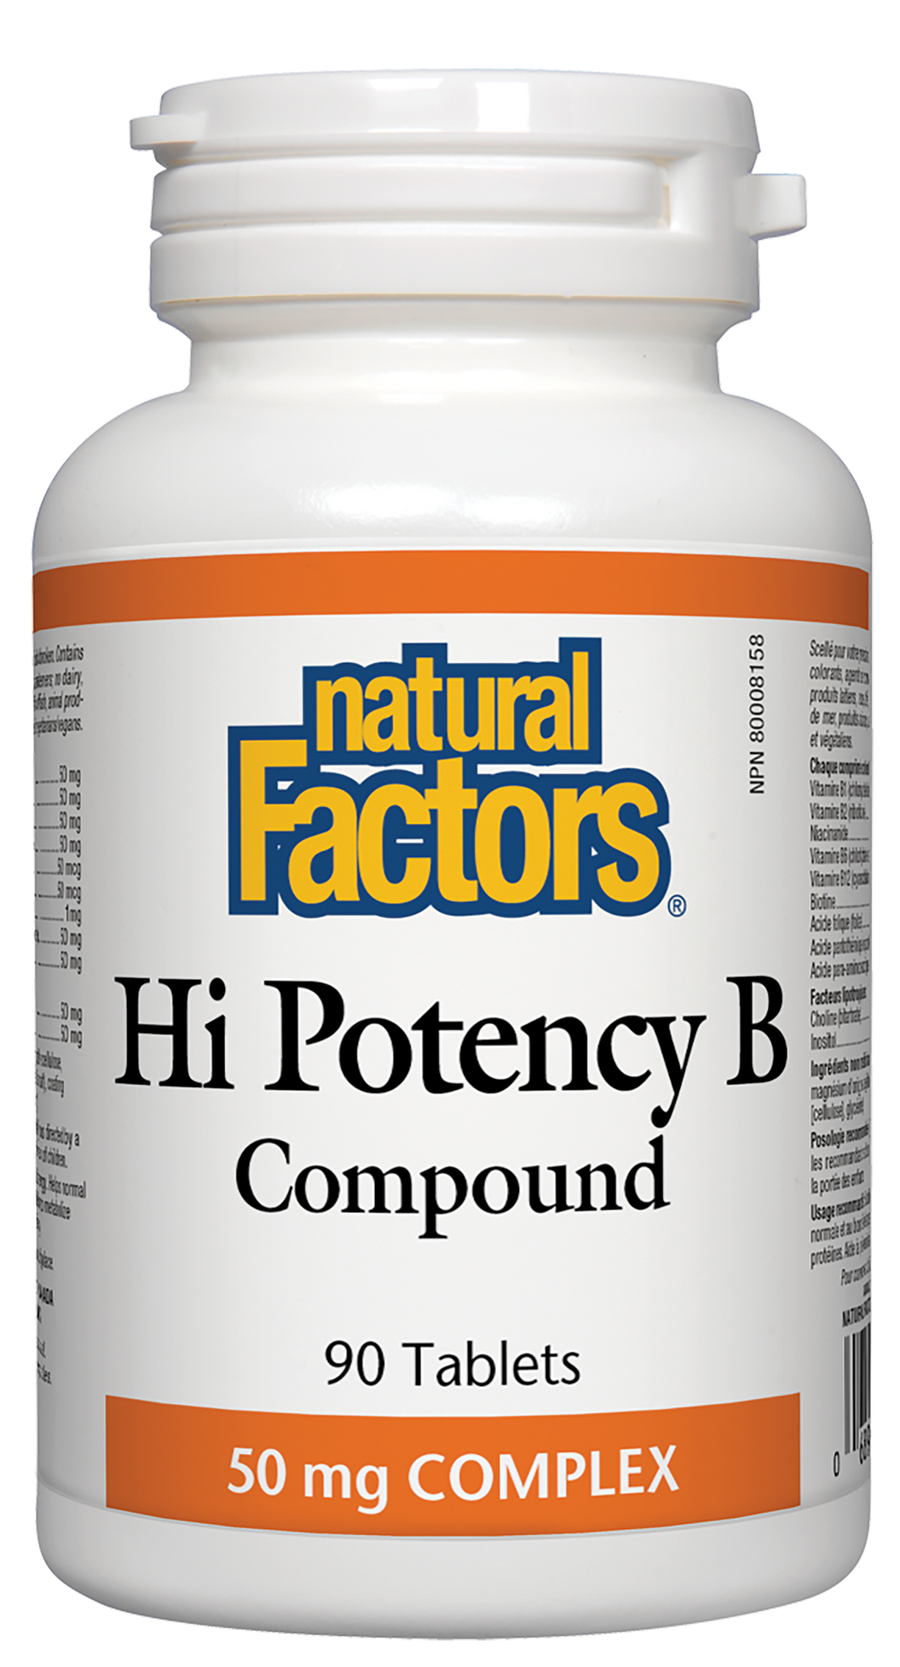 Natural Factors Hi Potency B Compound 90 Tablets